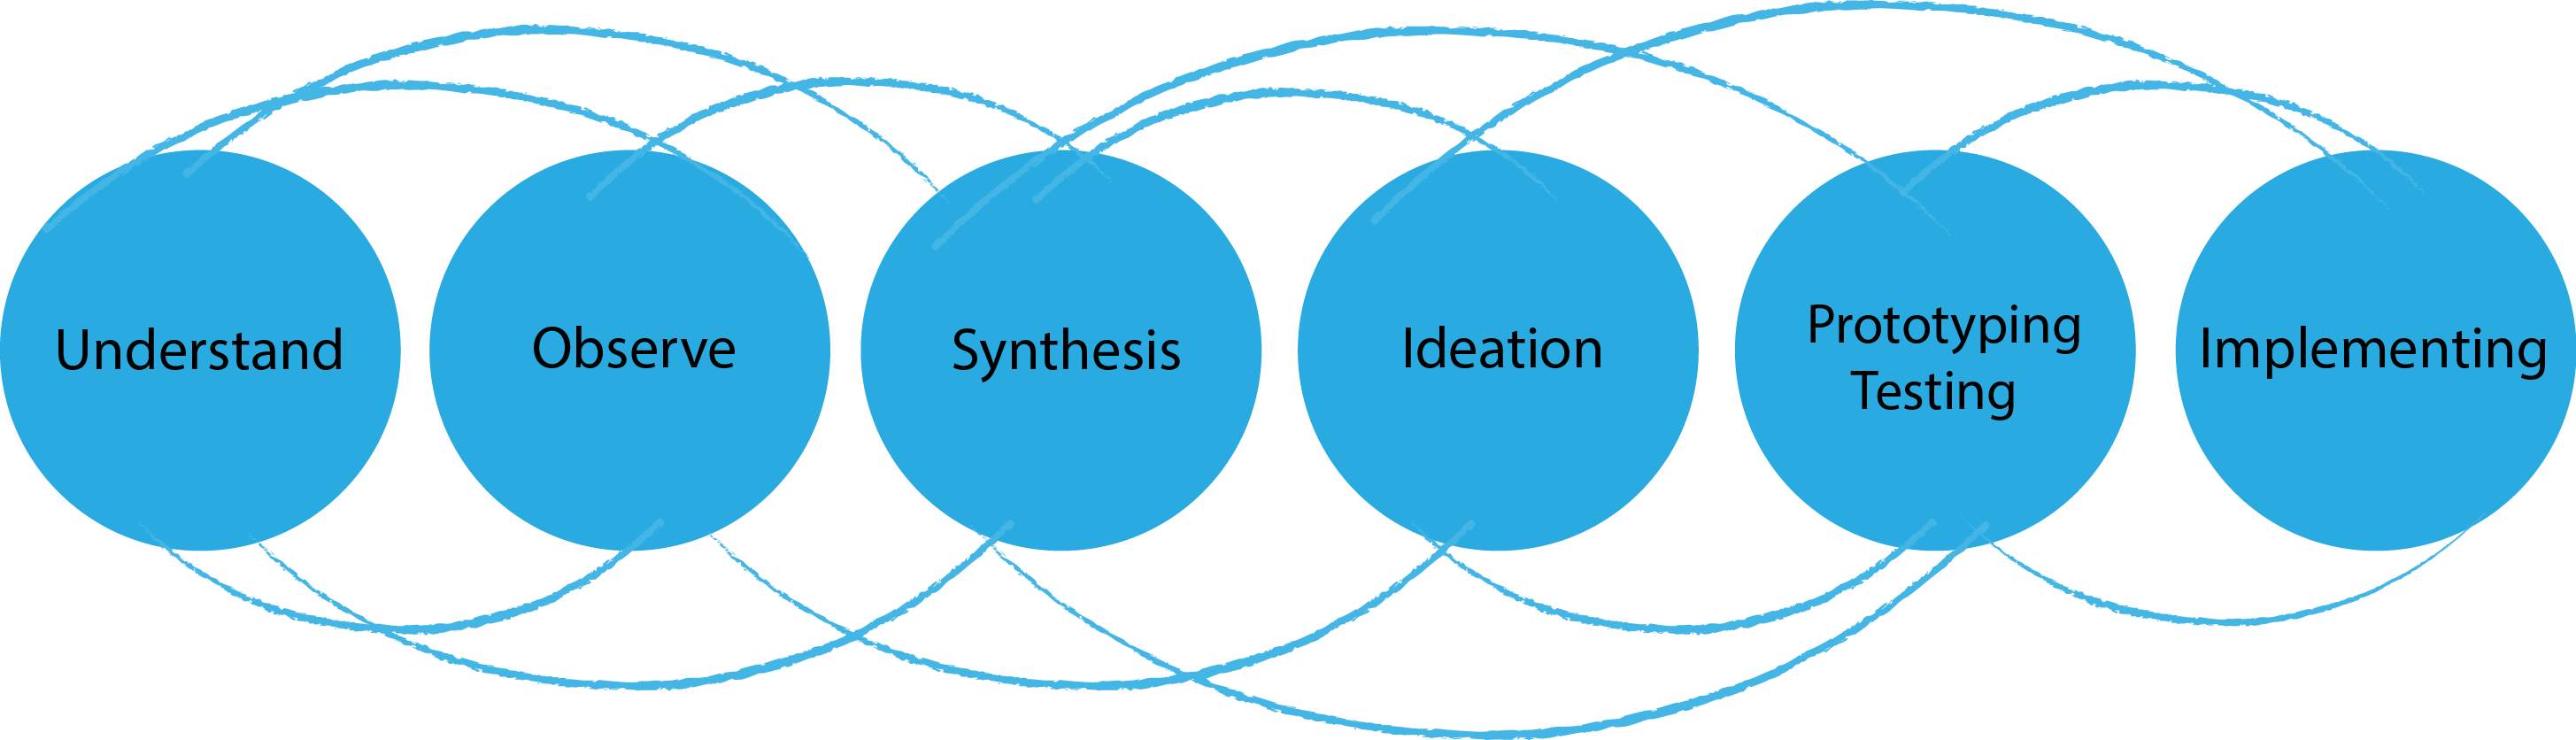 Design Thinking Agile Innovation Process  -  
Copyright Wikimedia